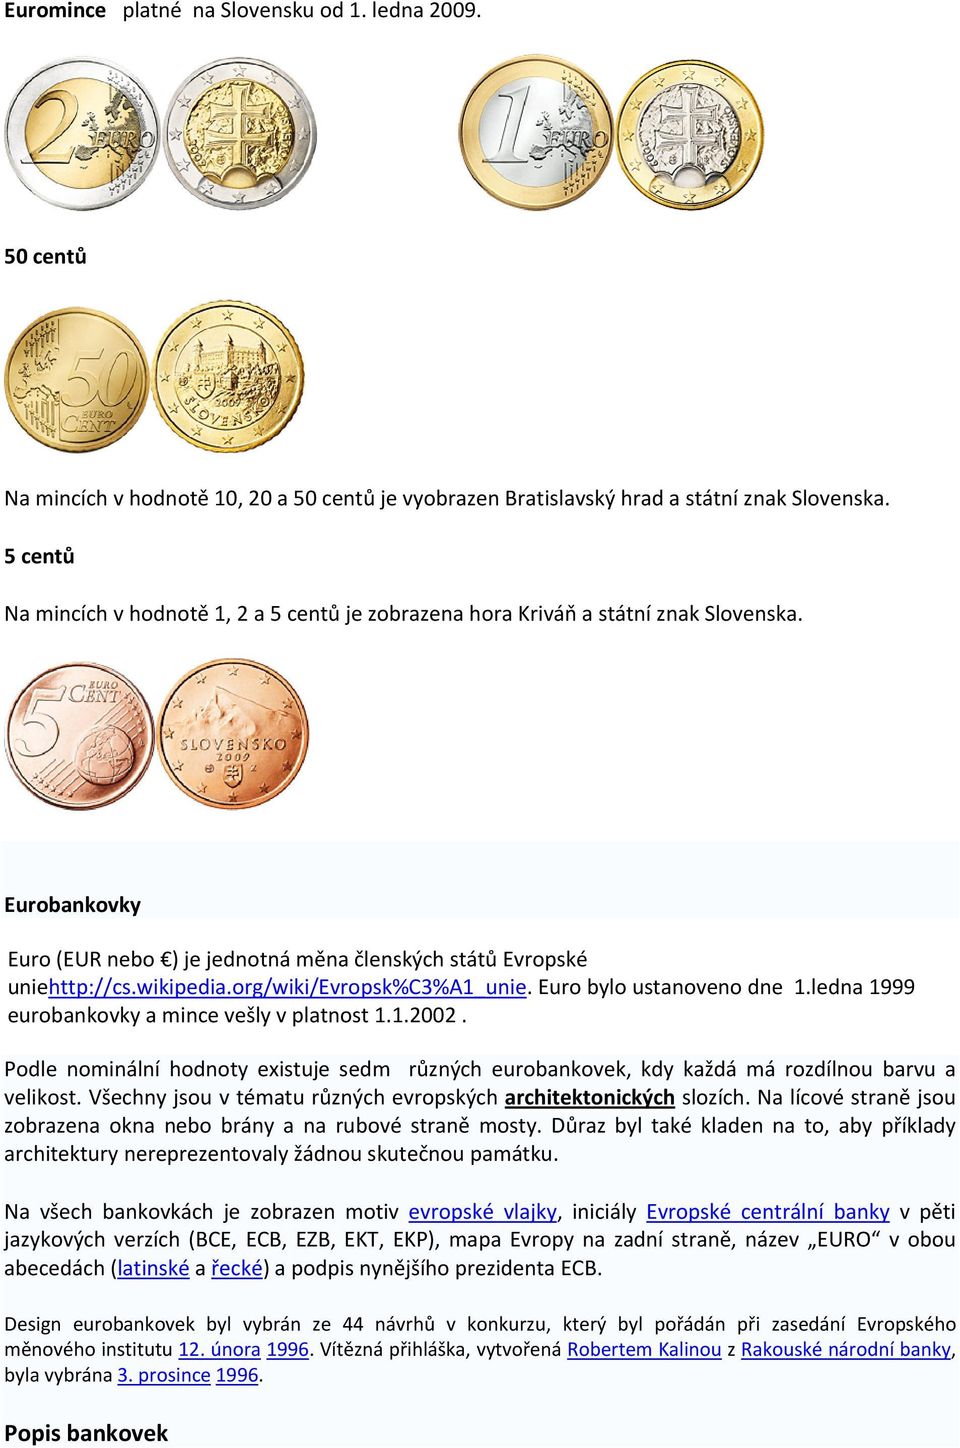 org/wiki/evropsk%c3%a1_unie. Euro bylo ustanoveno dne 1.ledna 1999 eurobankovky a mince vešly v platnost 1.1.2002.